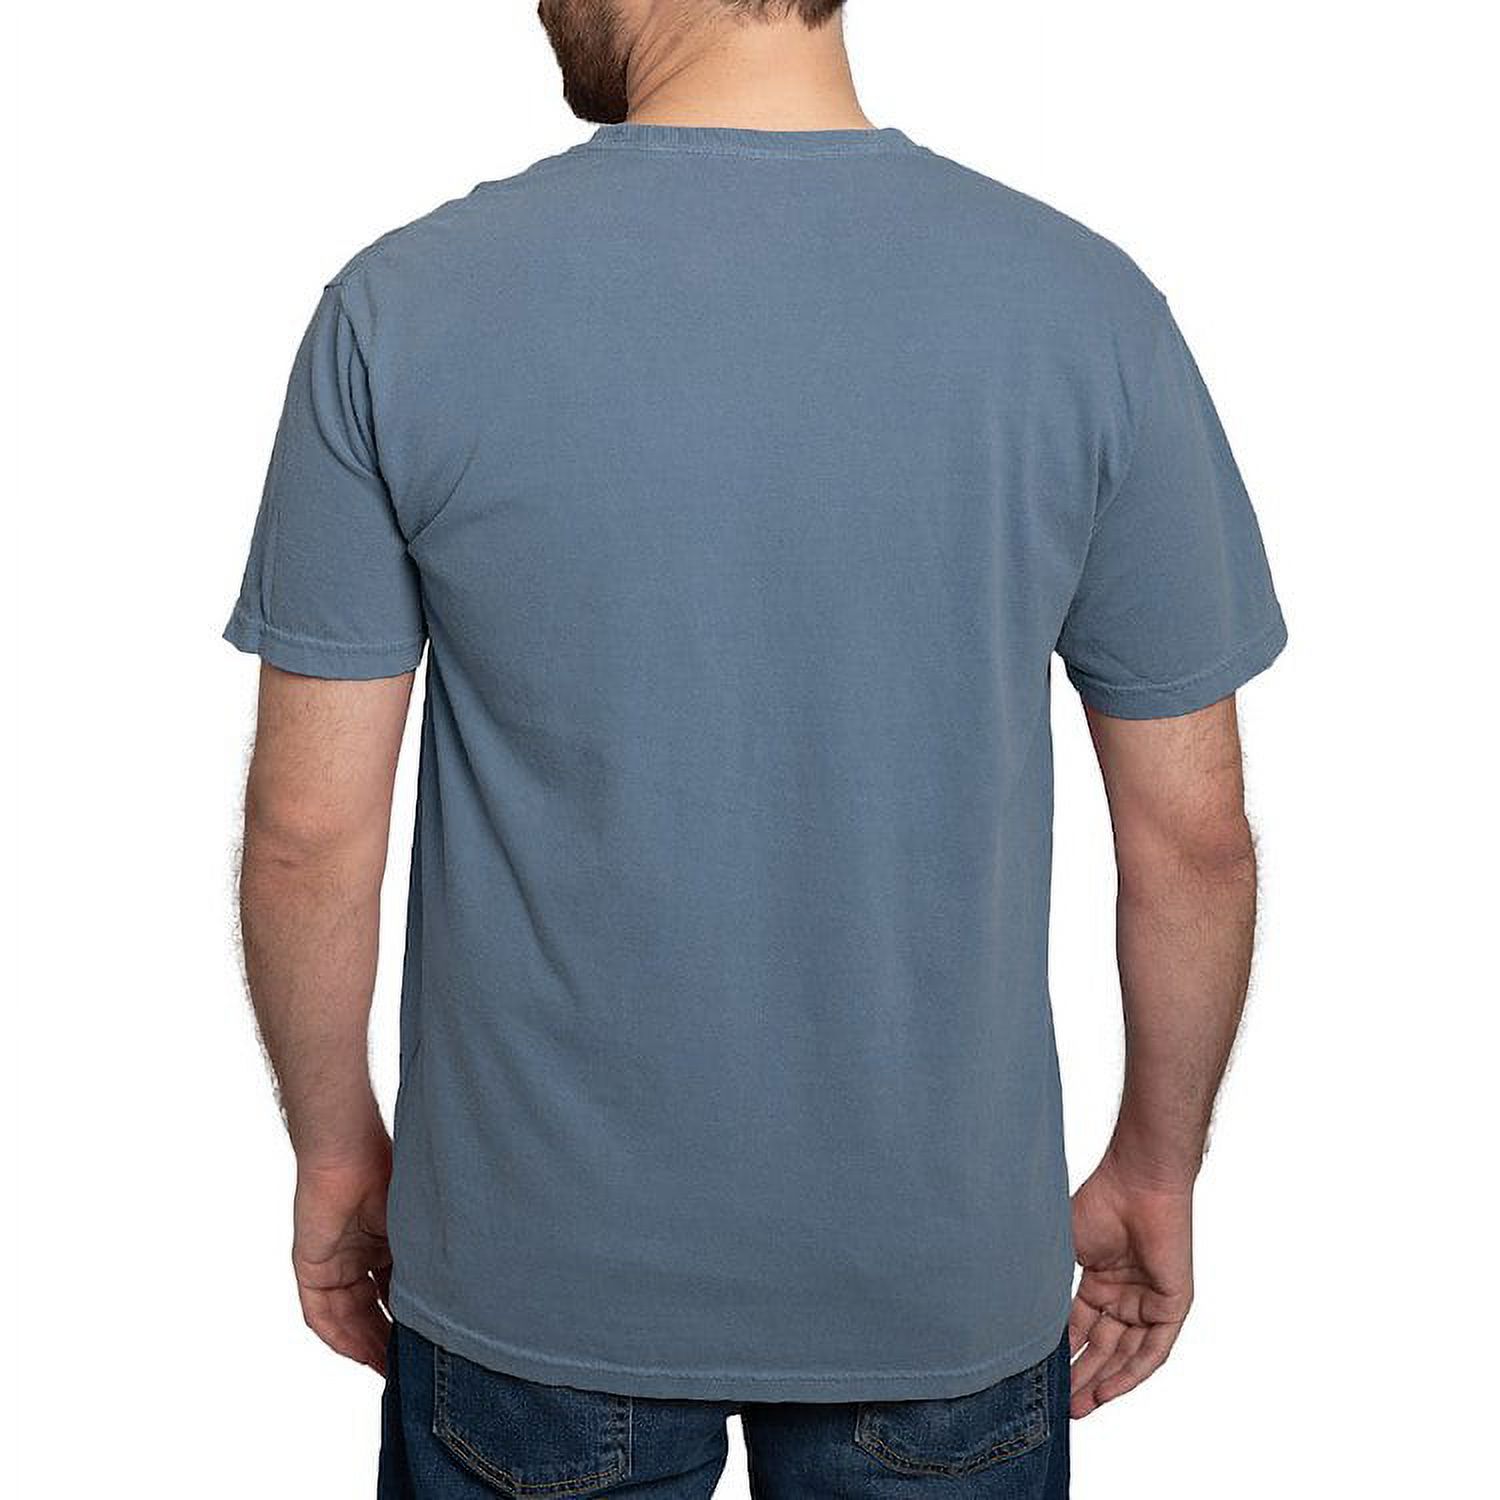 CafePress - Spock Hand - Mens Comfort Colors Shirt - image 2 of 5